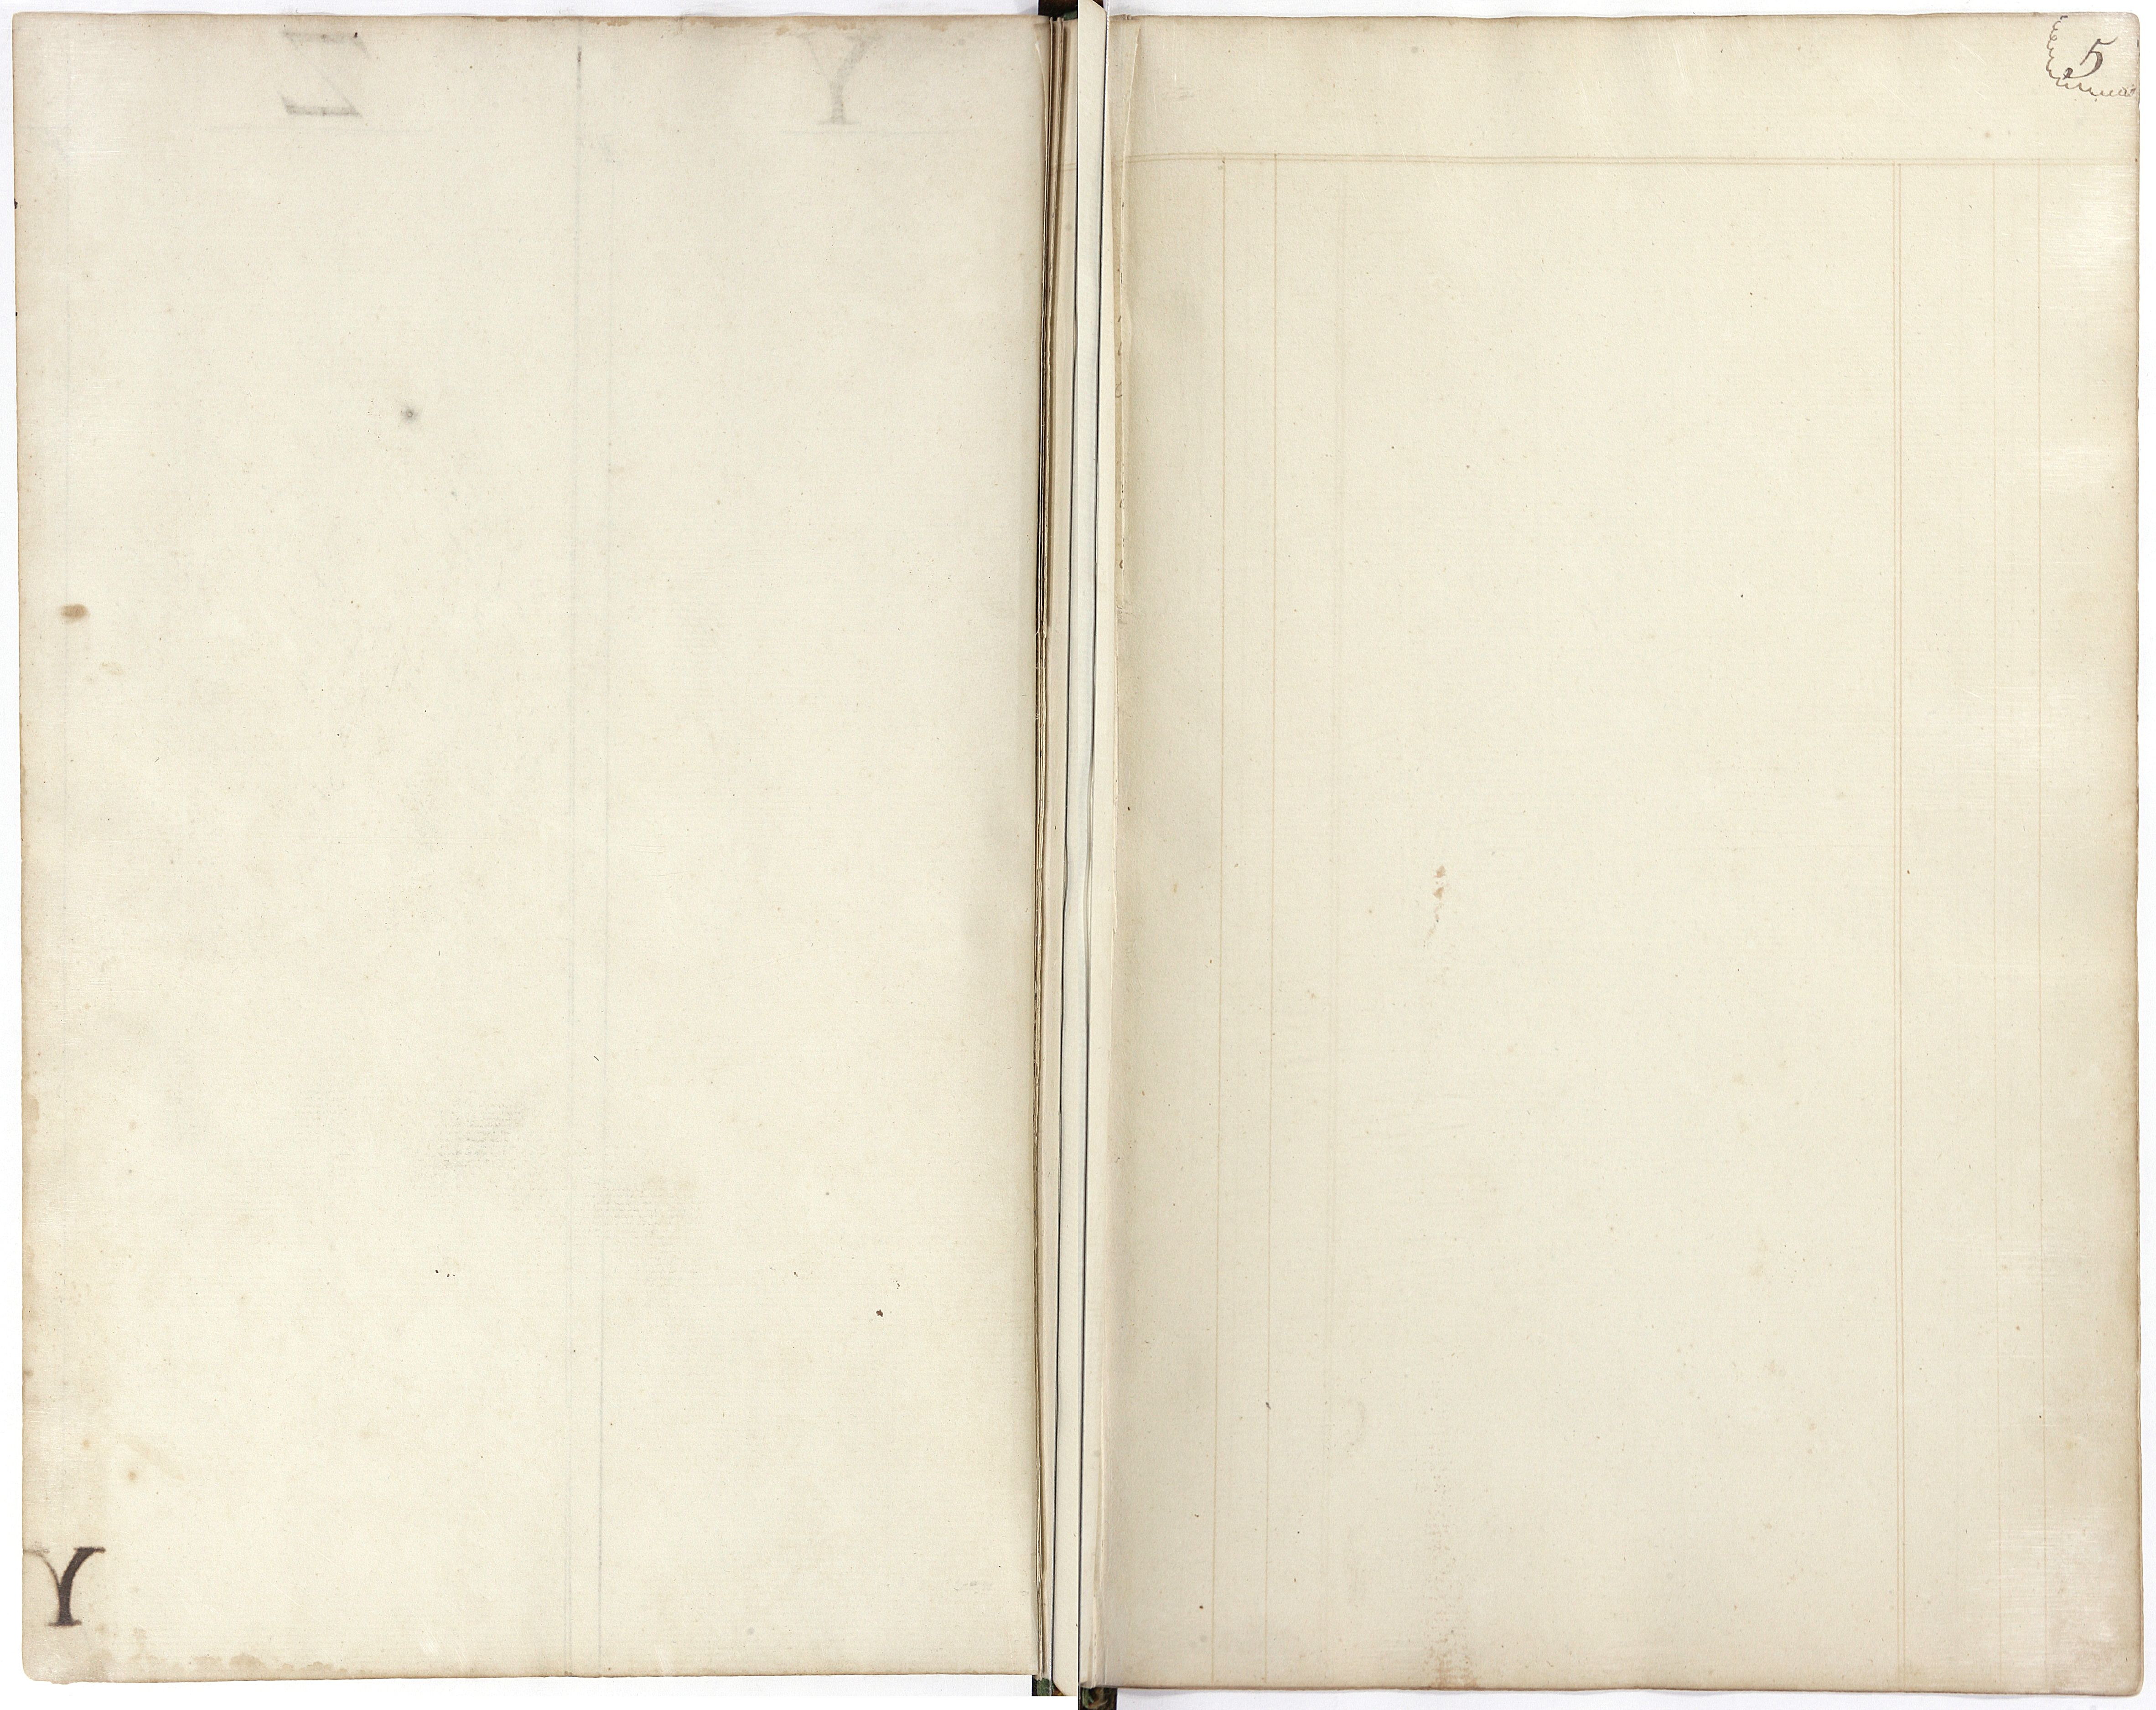 Image of Folio 5 (transcription below)